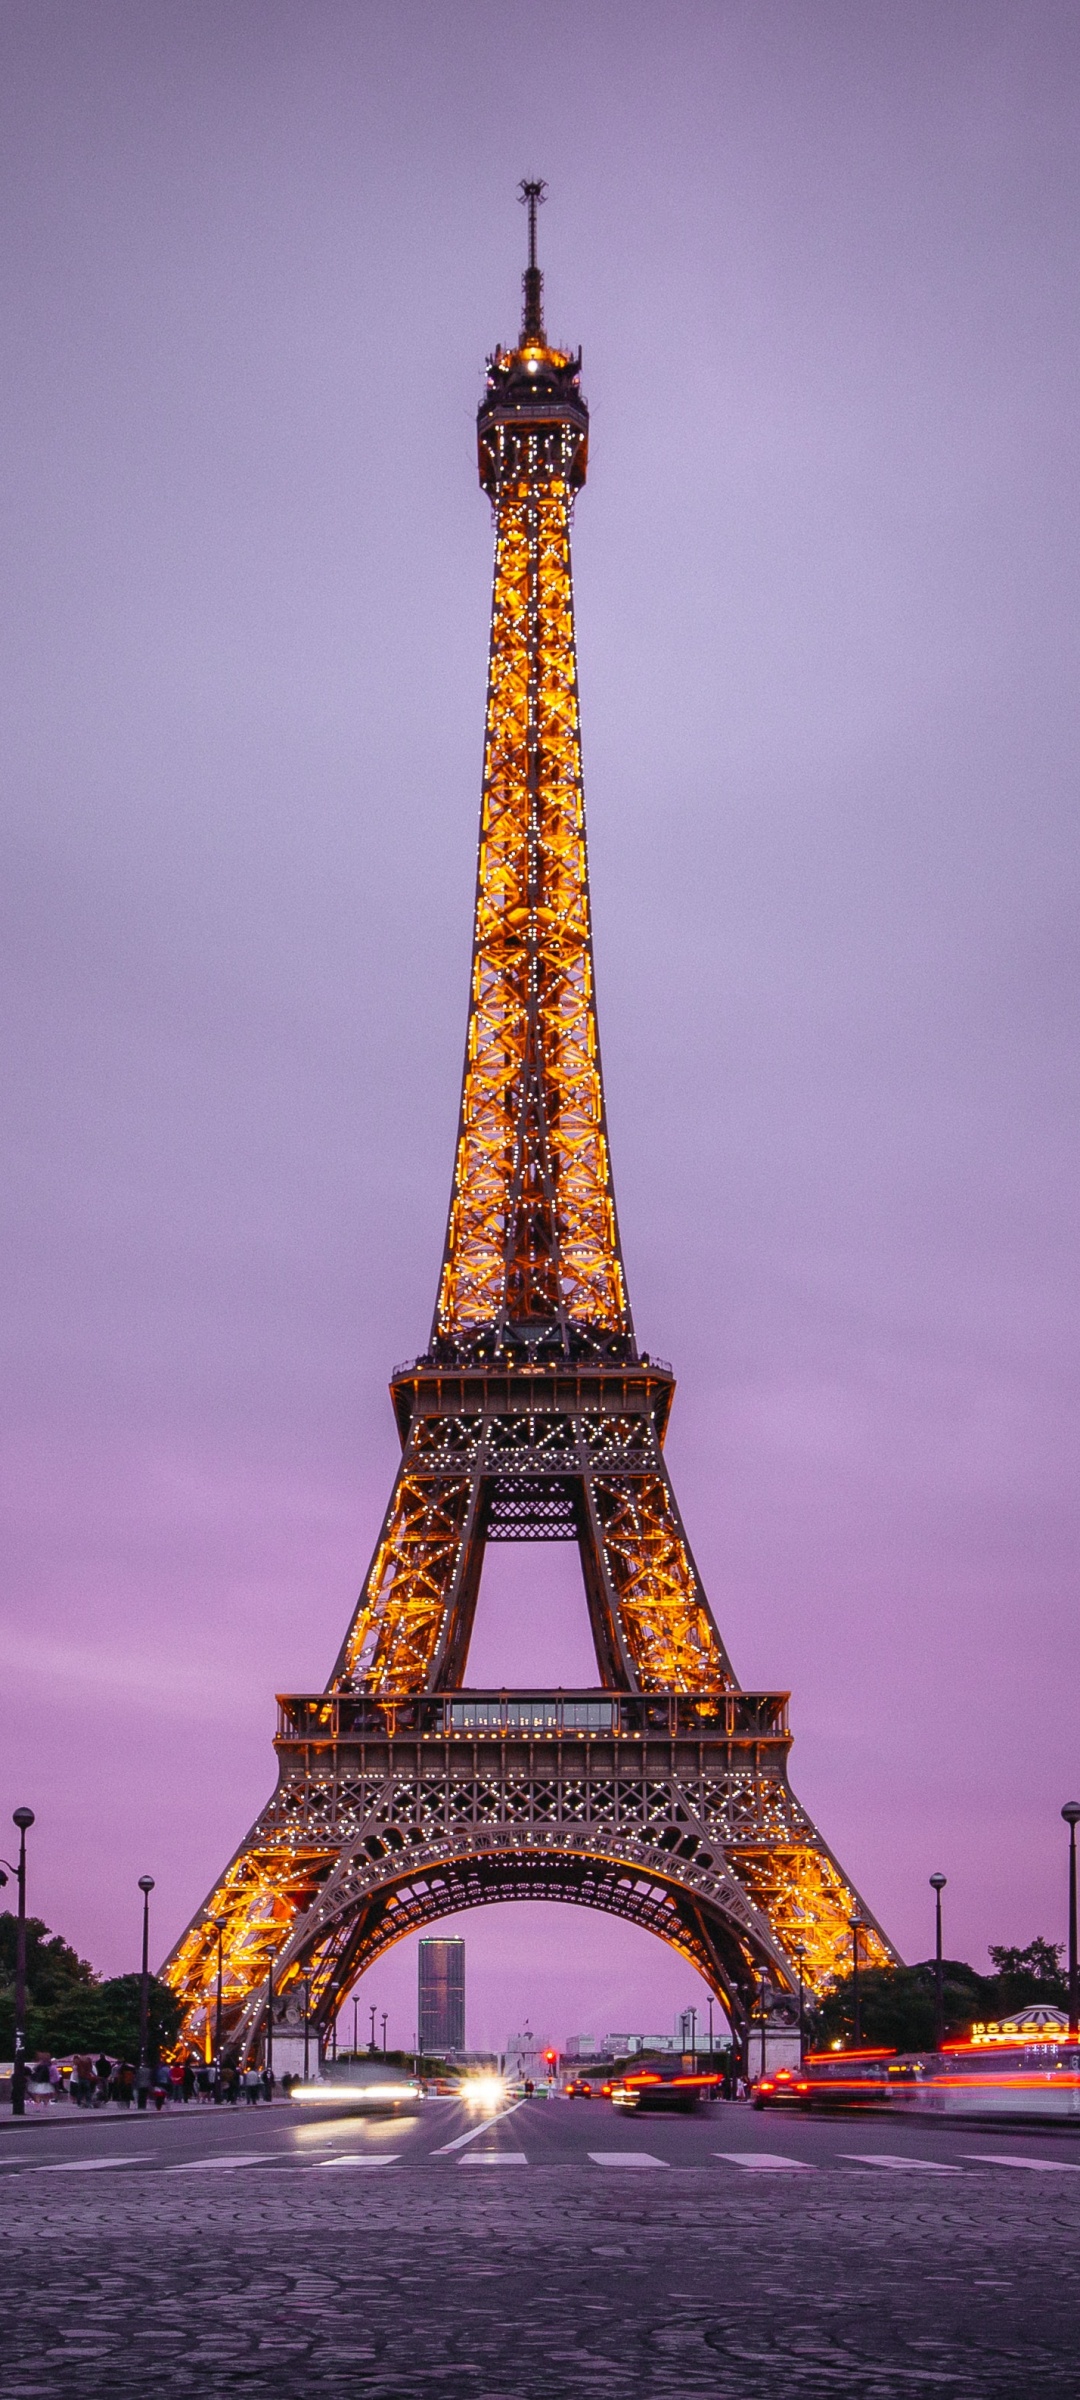 Eiffel Tower 4K Wallpaper, Paris, France, Evening, Purple Sky, Lights